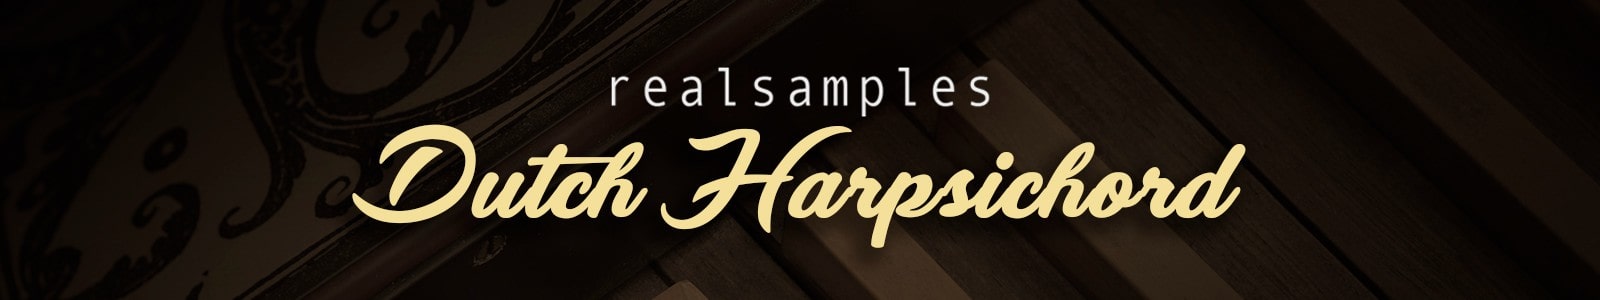 dutch harpsichord